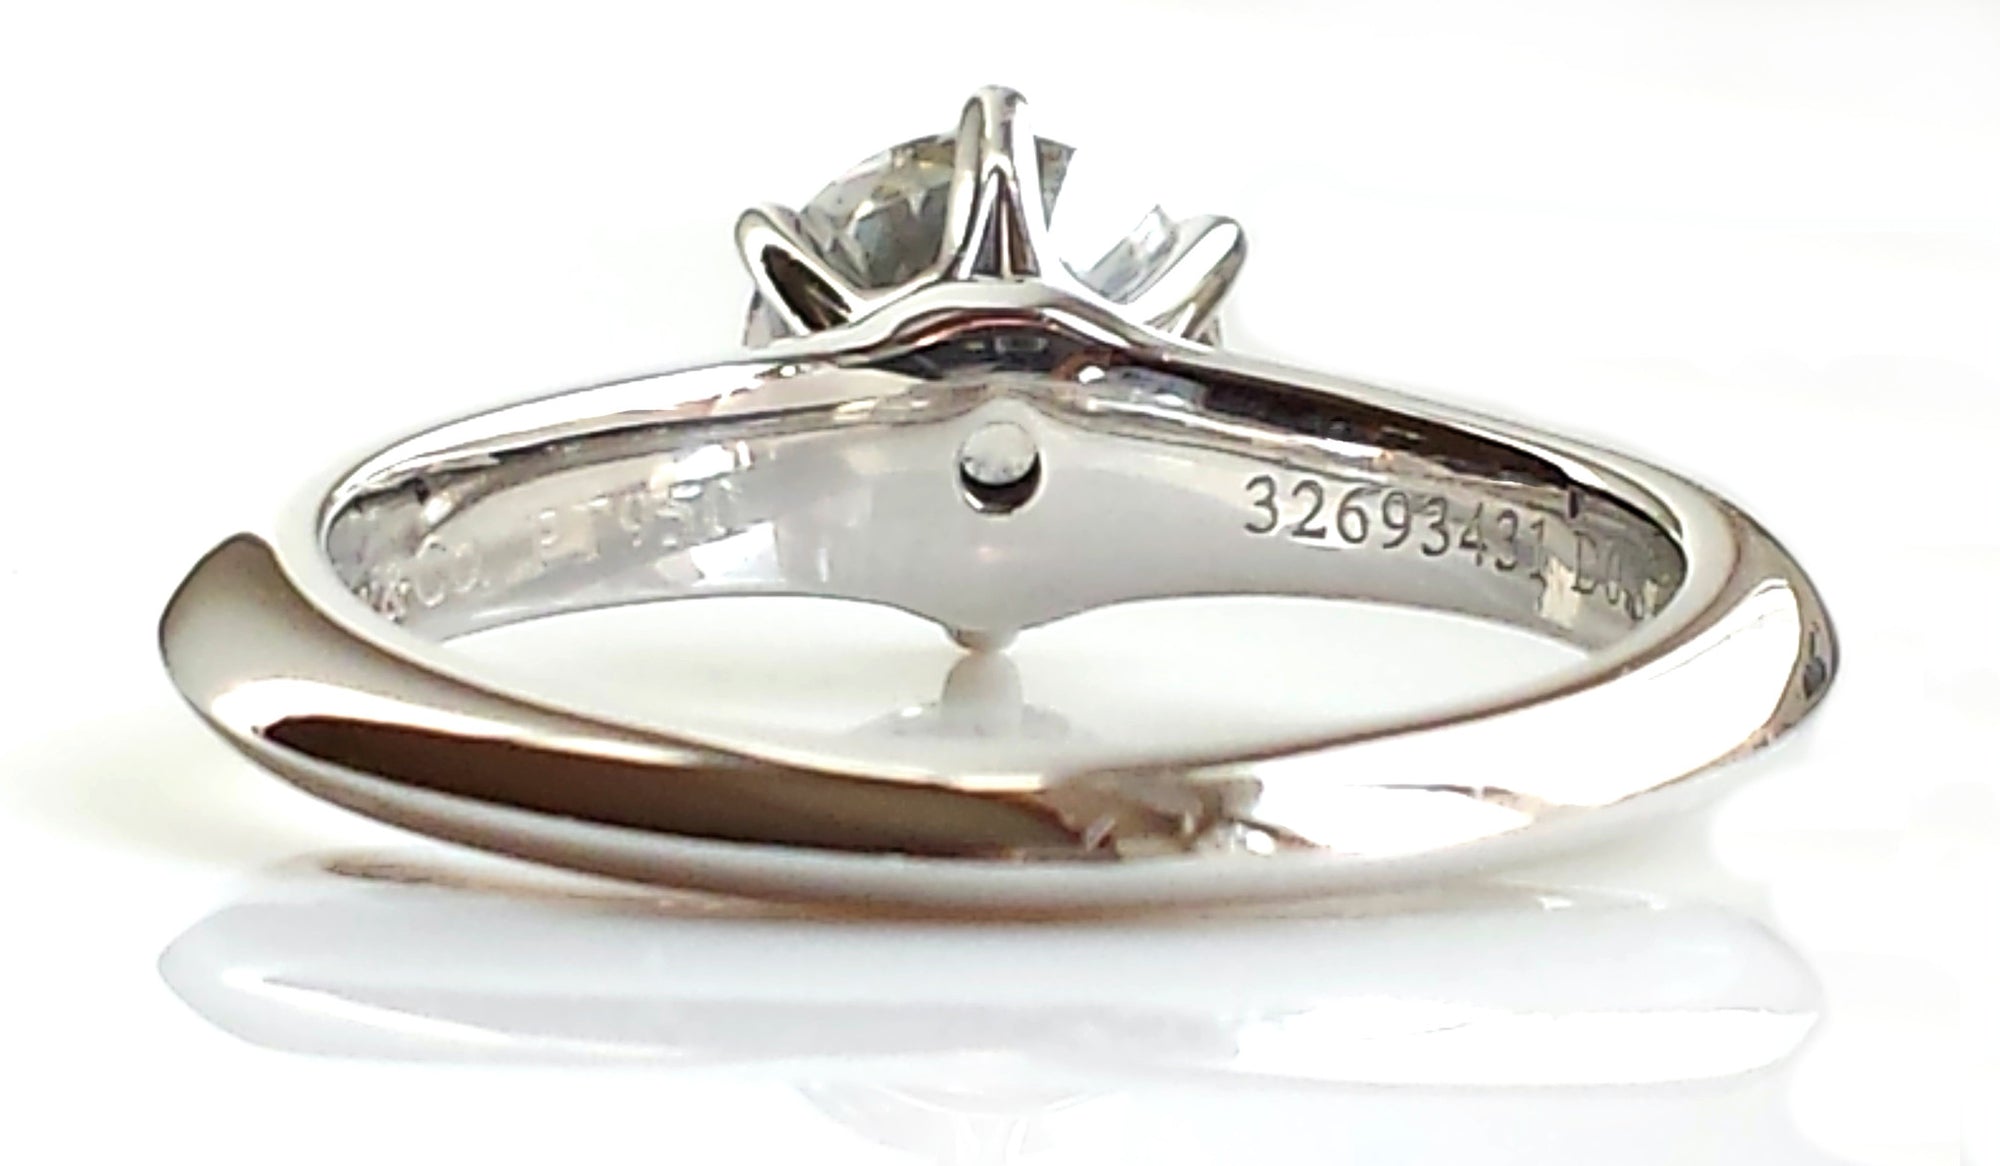 Tiffany & Co. 0.87ct H/VS1 Round Brilliant Cut Diamond Engagement Ring